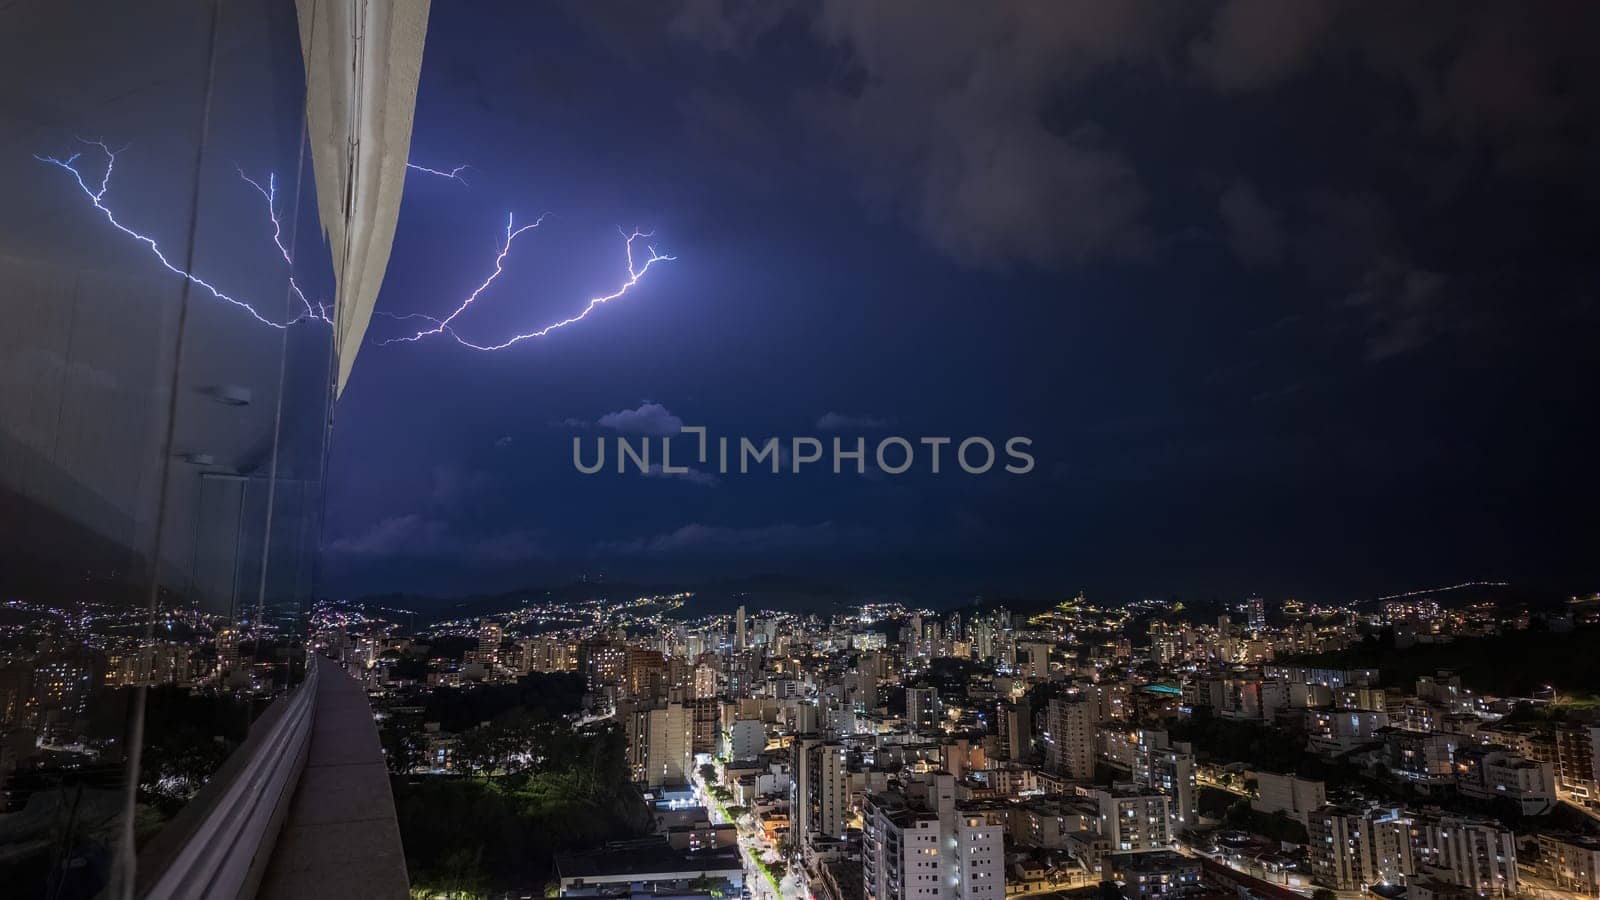 Spectacular Nighttime Lightning Over Urban Landscape by FerradalFCG